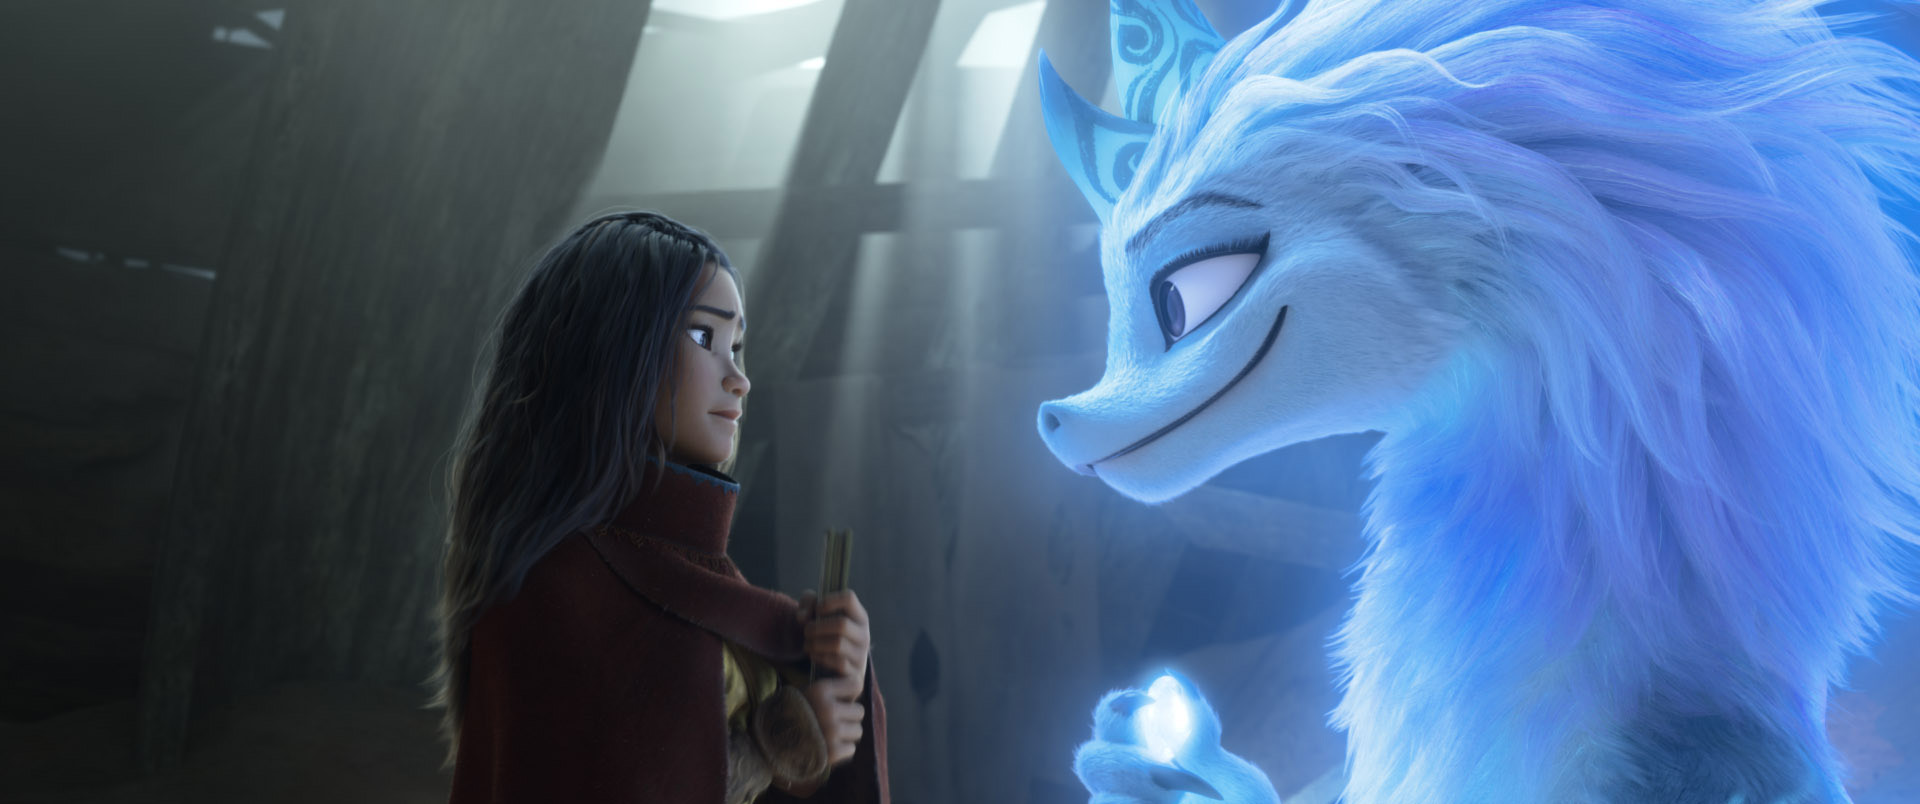 New Trailer Debuts for 'Raya and the Last Dragon' - The Walt Disney Company